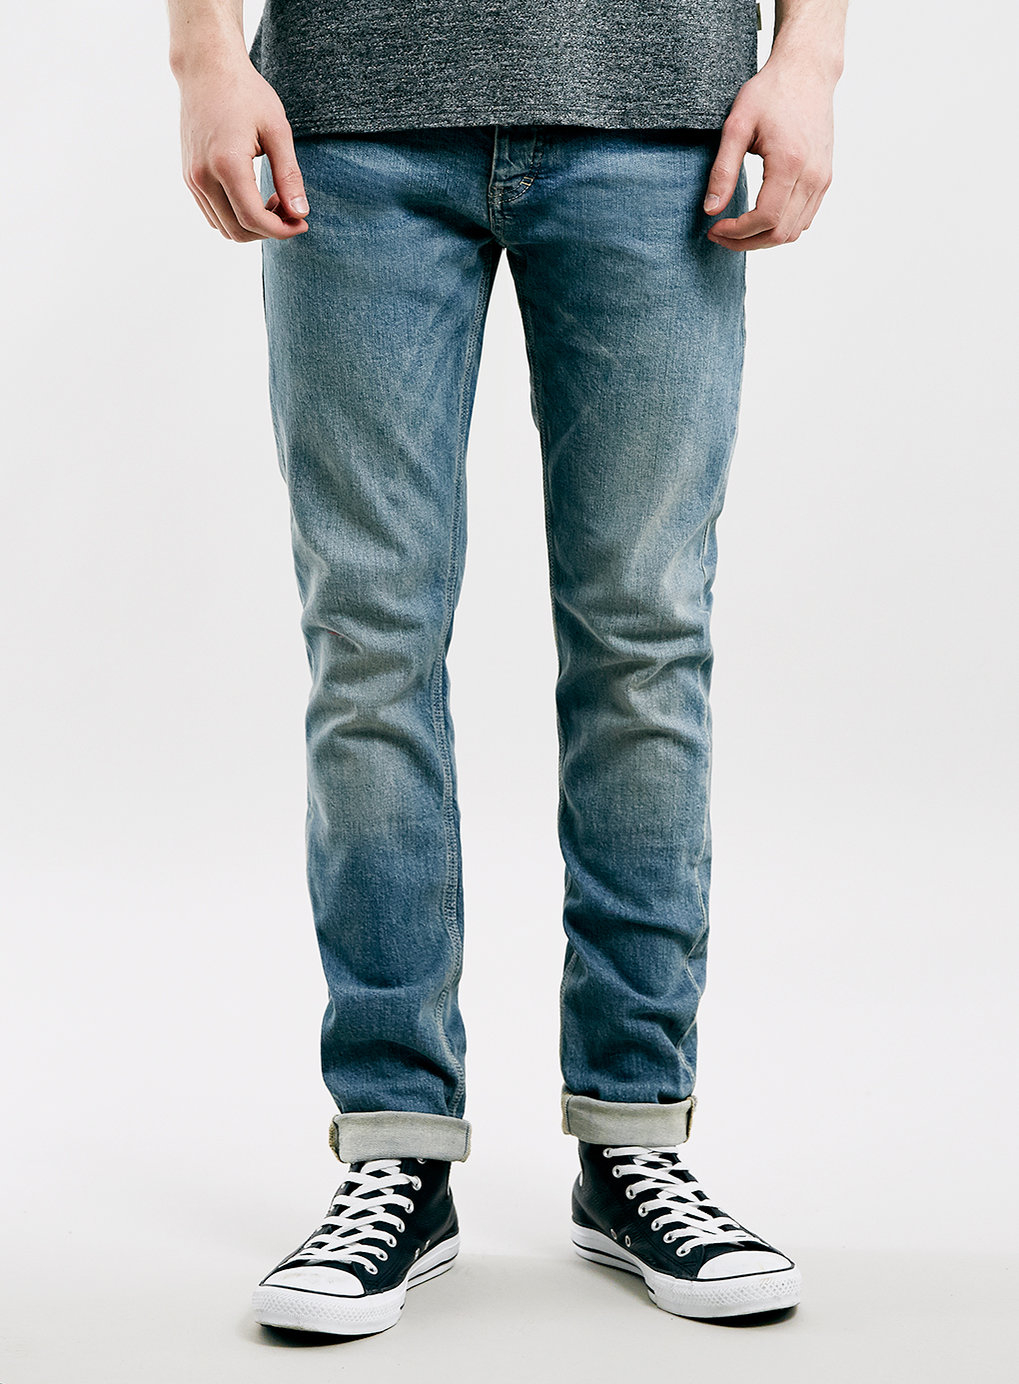 light blue jeans mens slim fit